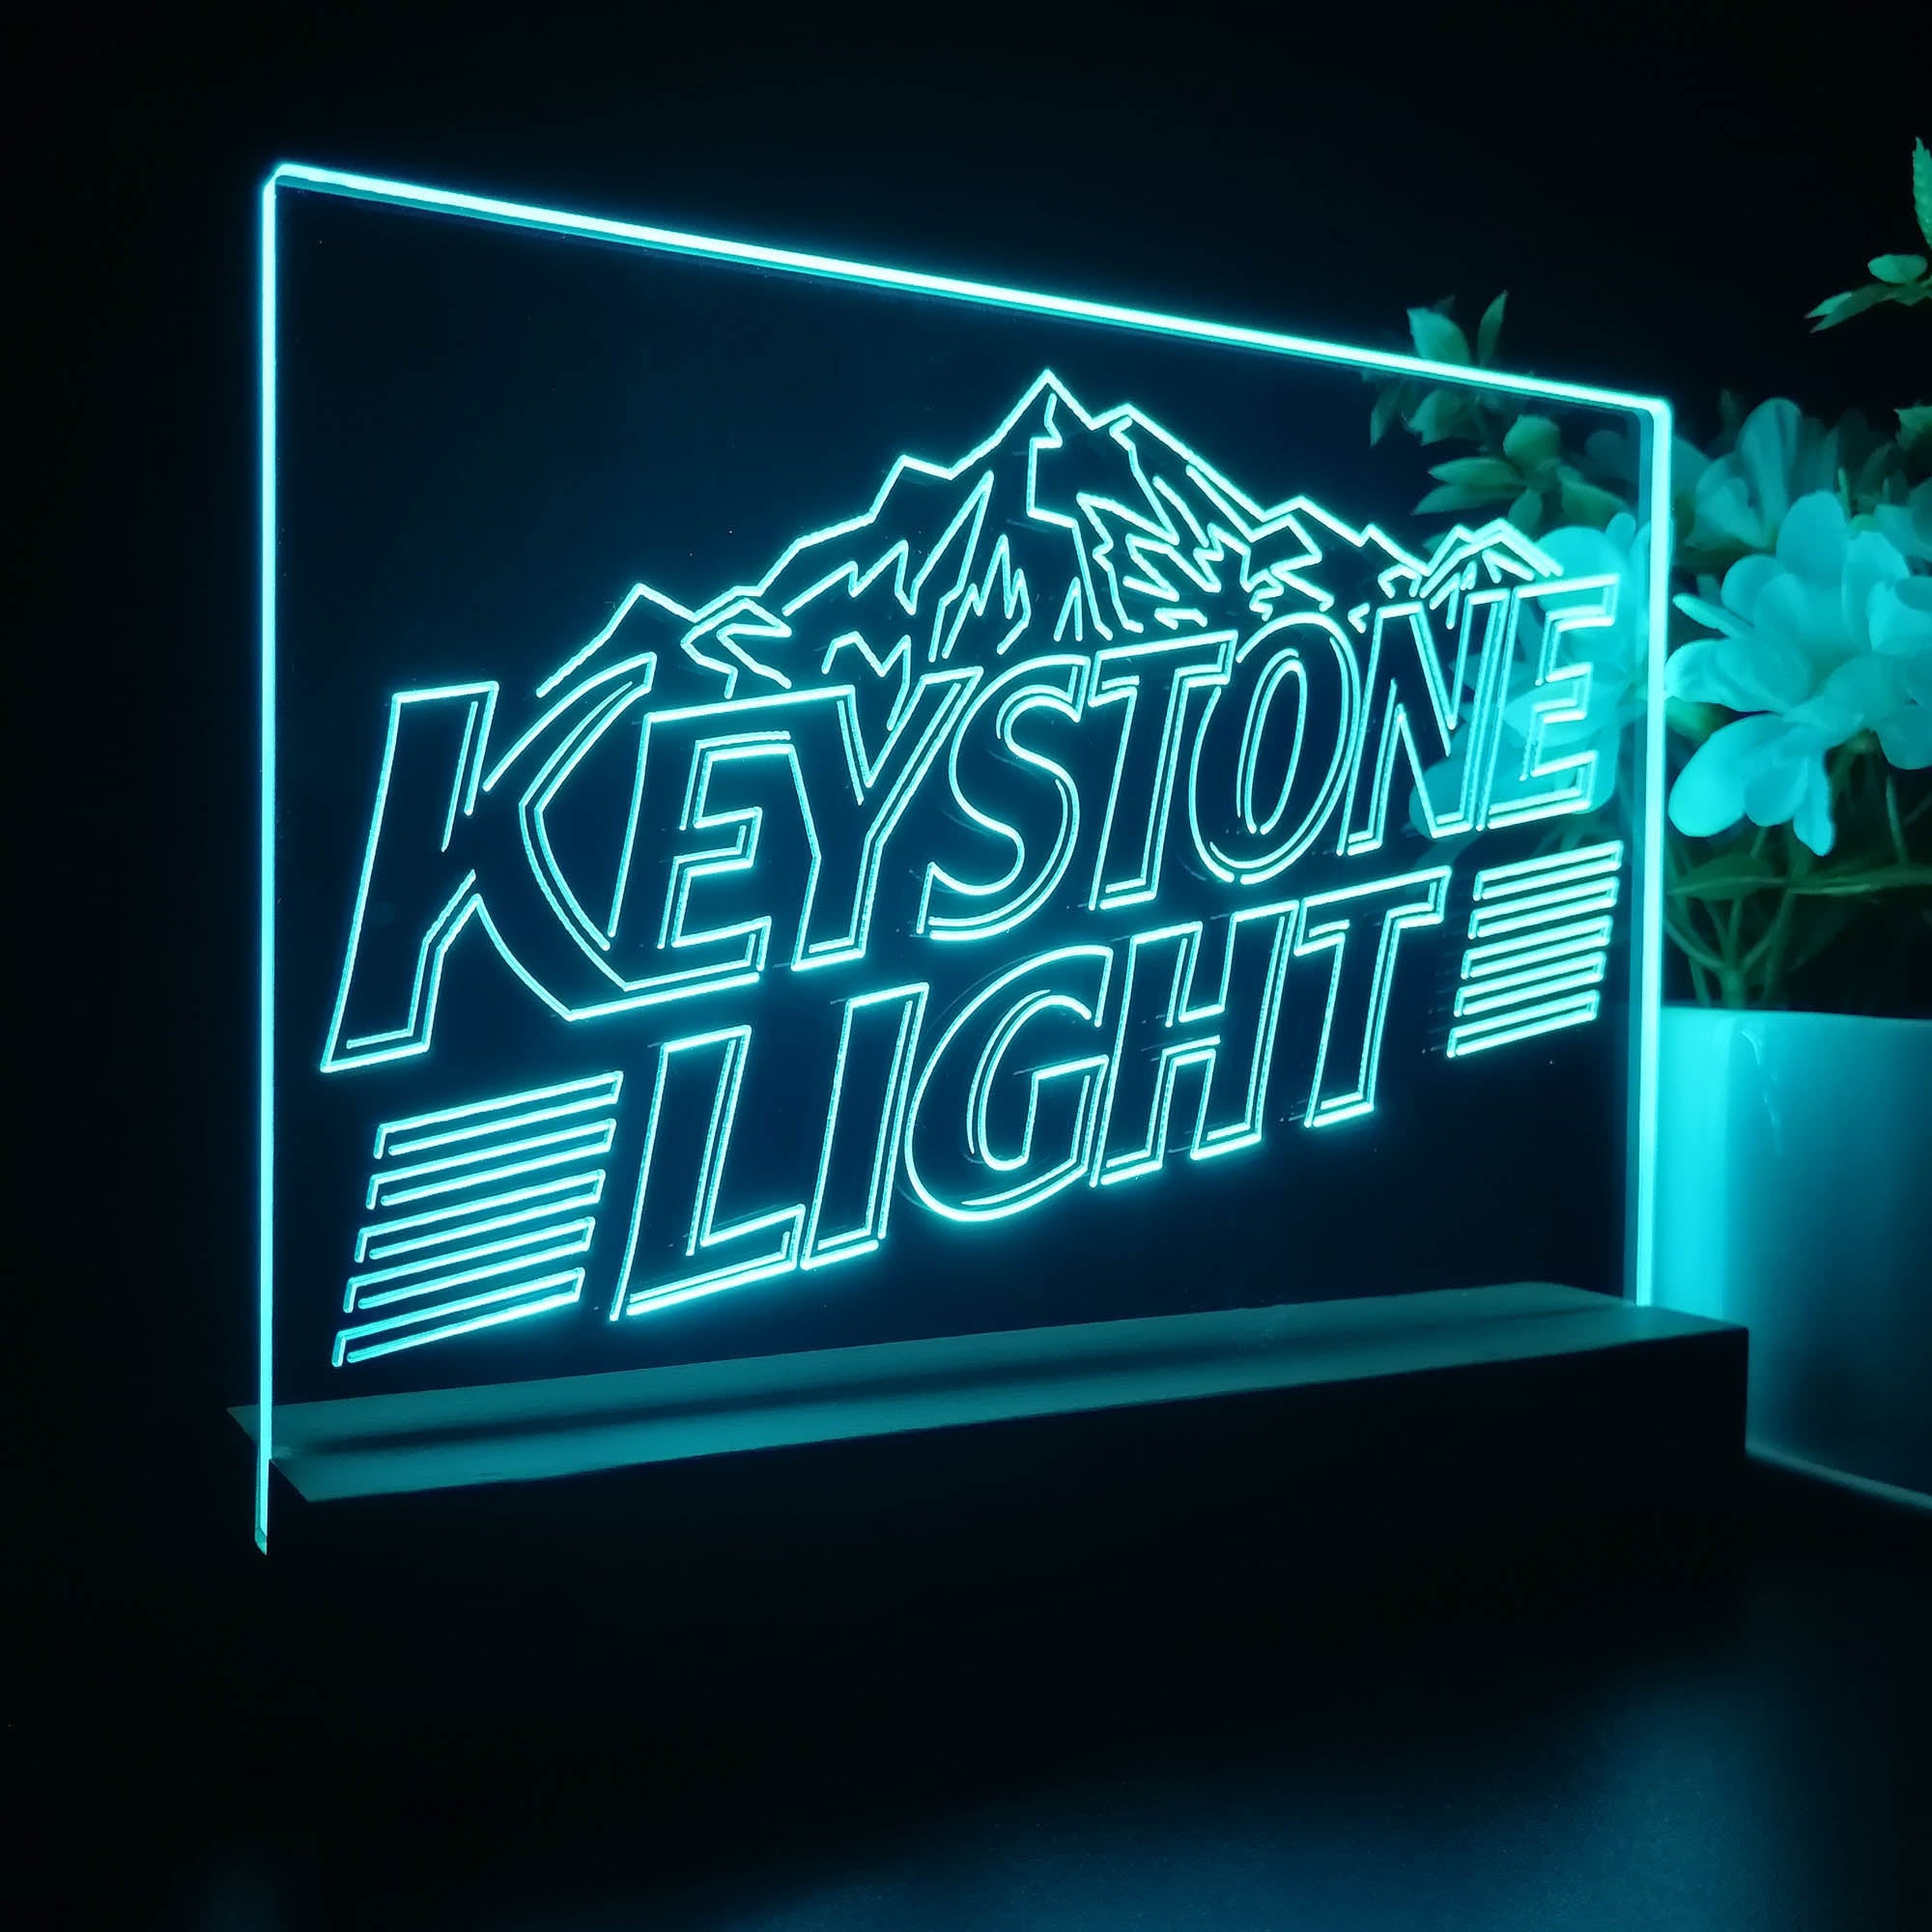 Keystone Light Neon Sign Pub Bar Decor Lamp